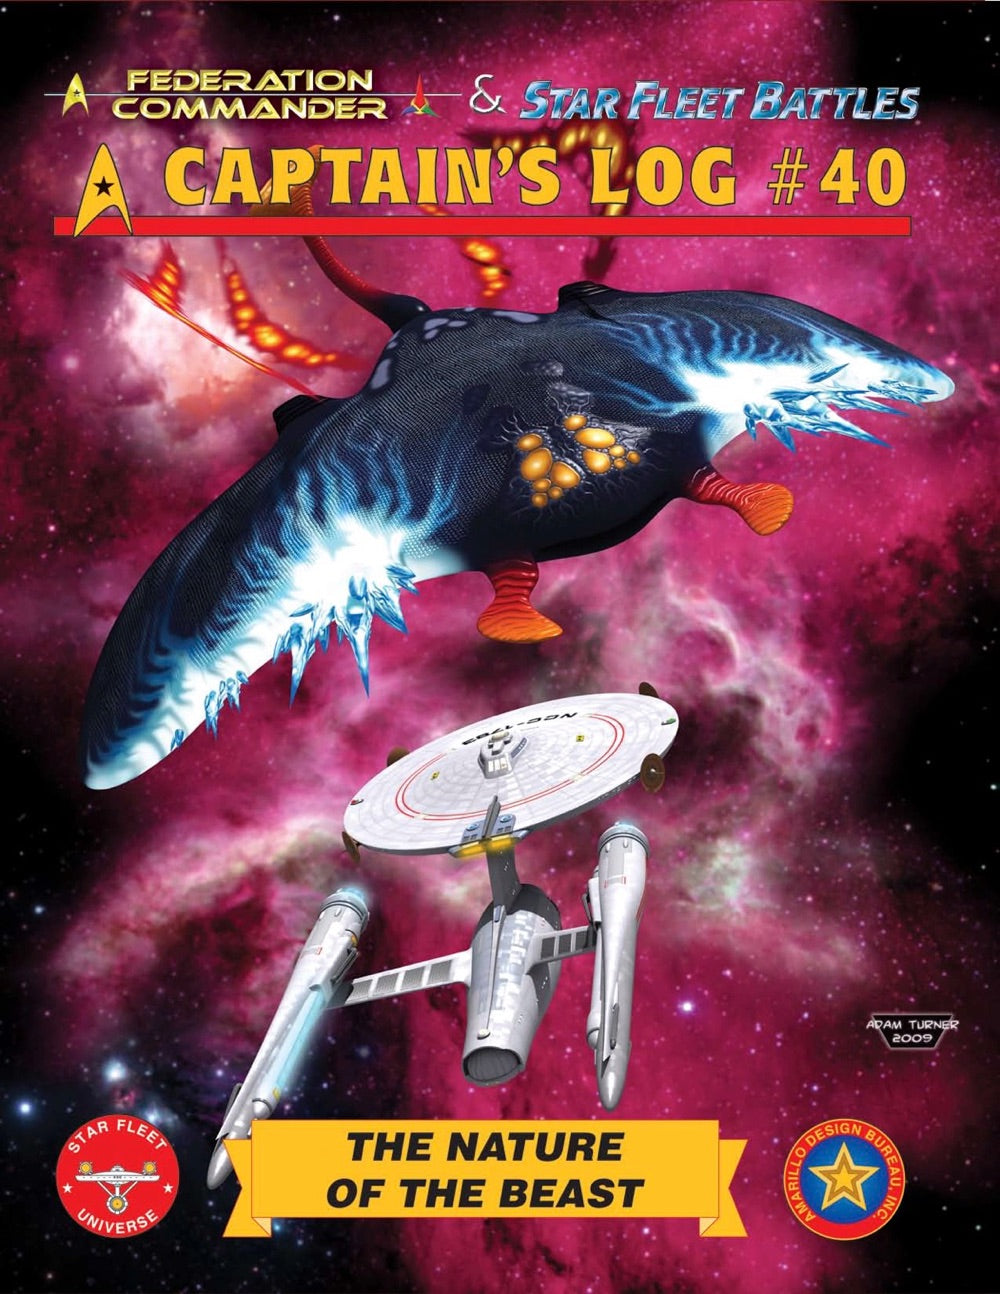 Captain's Log #40